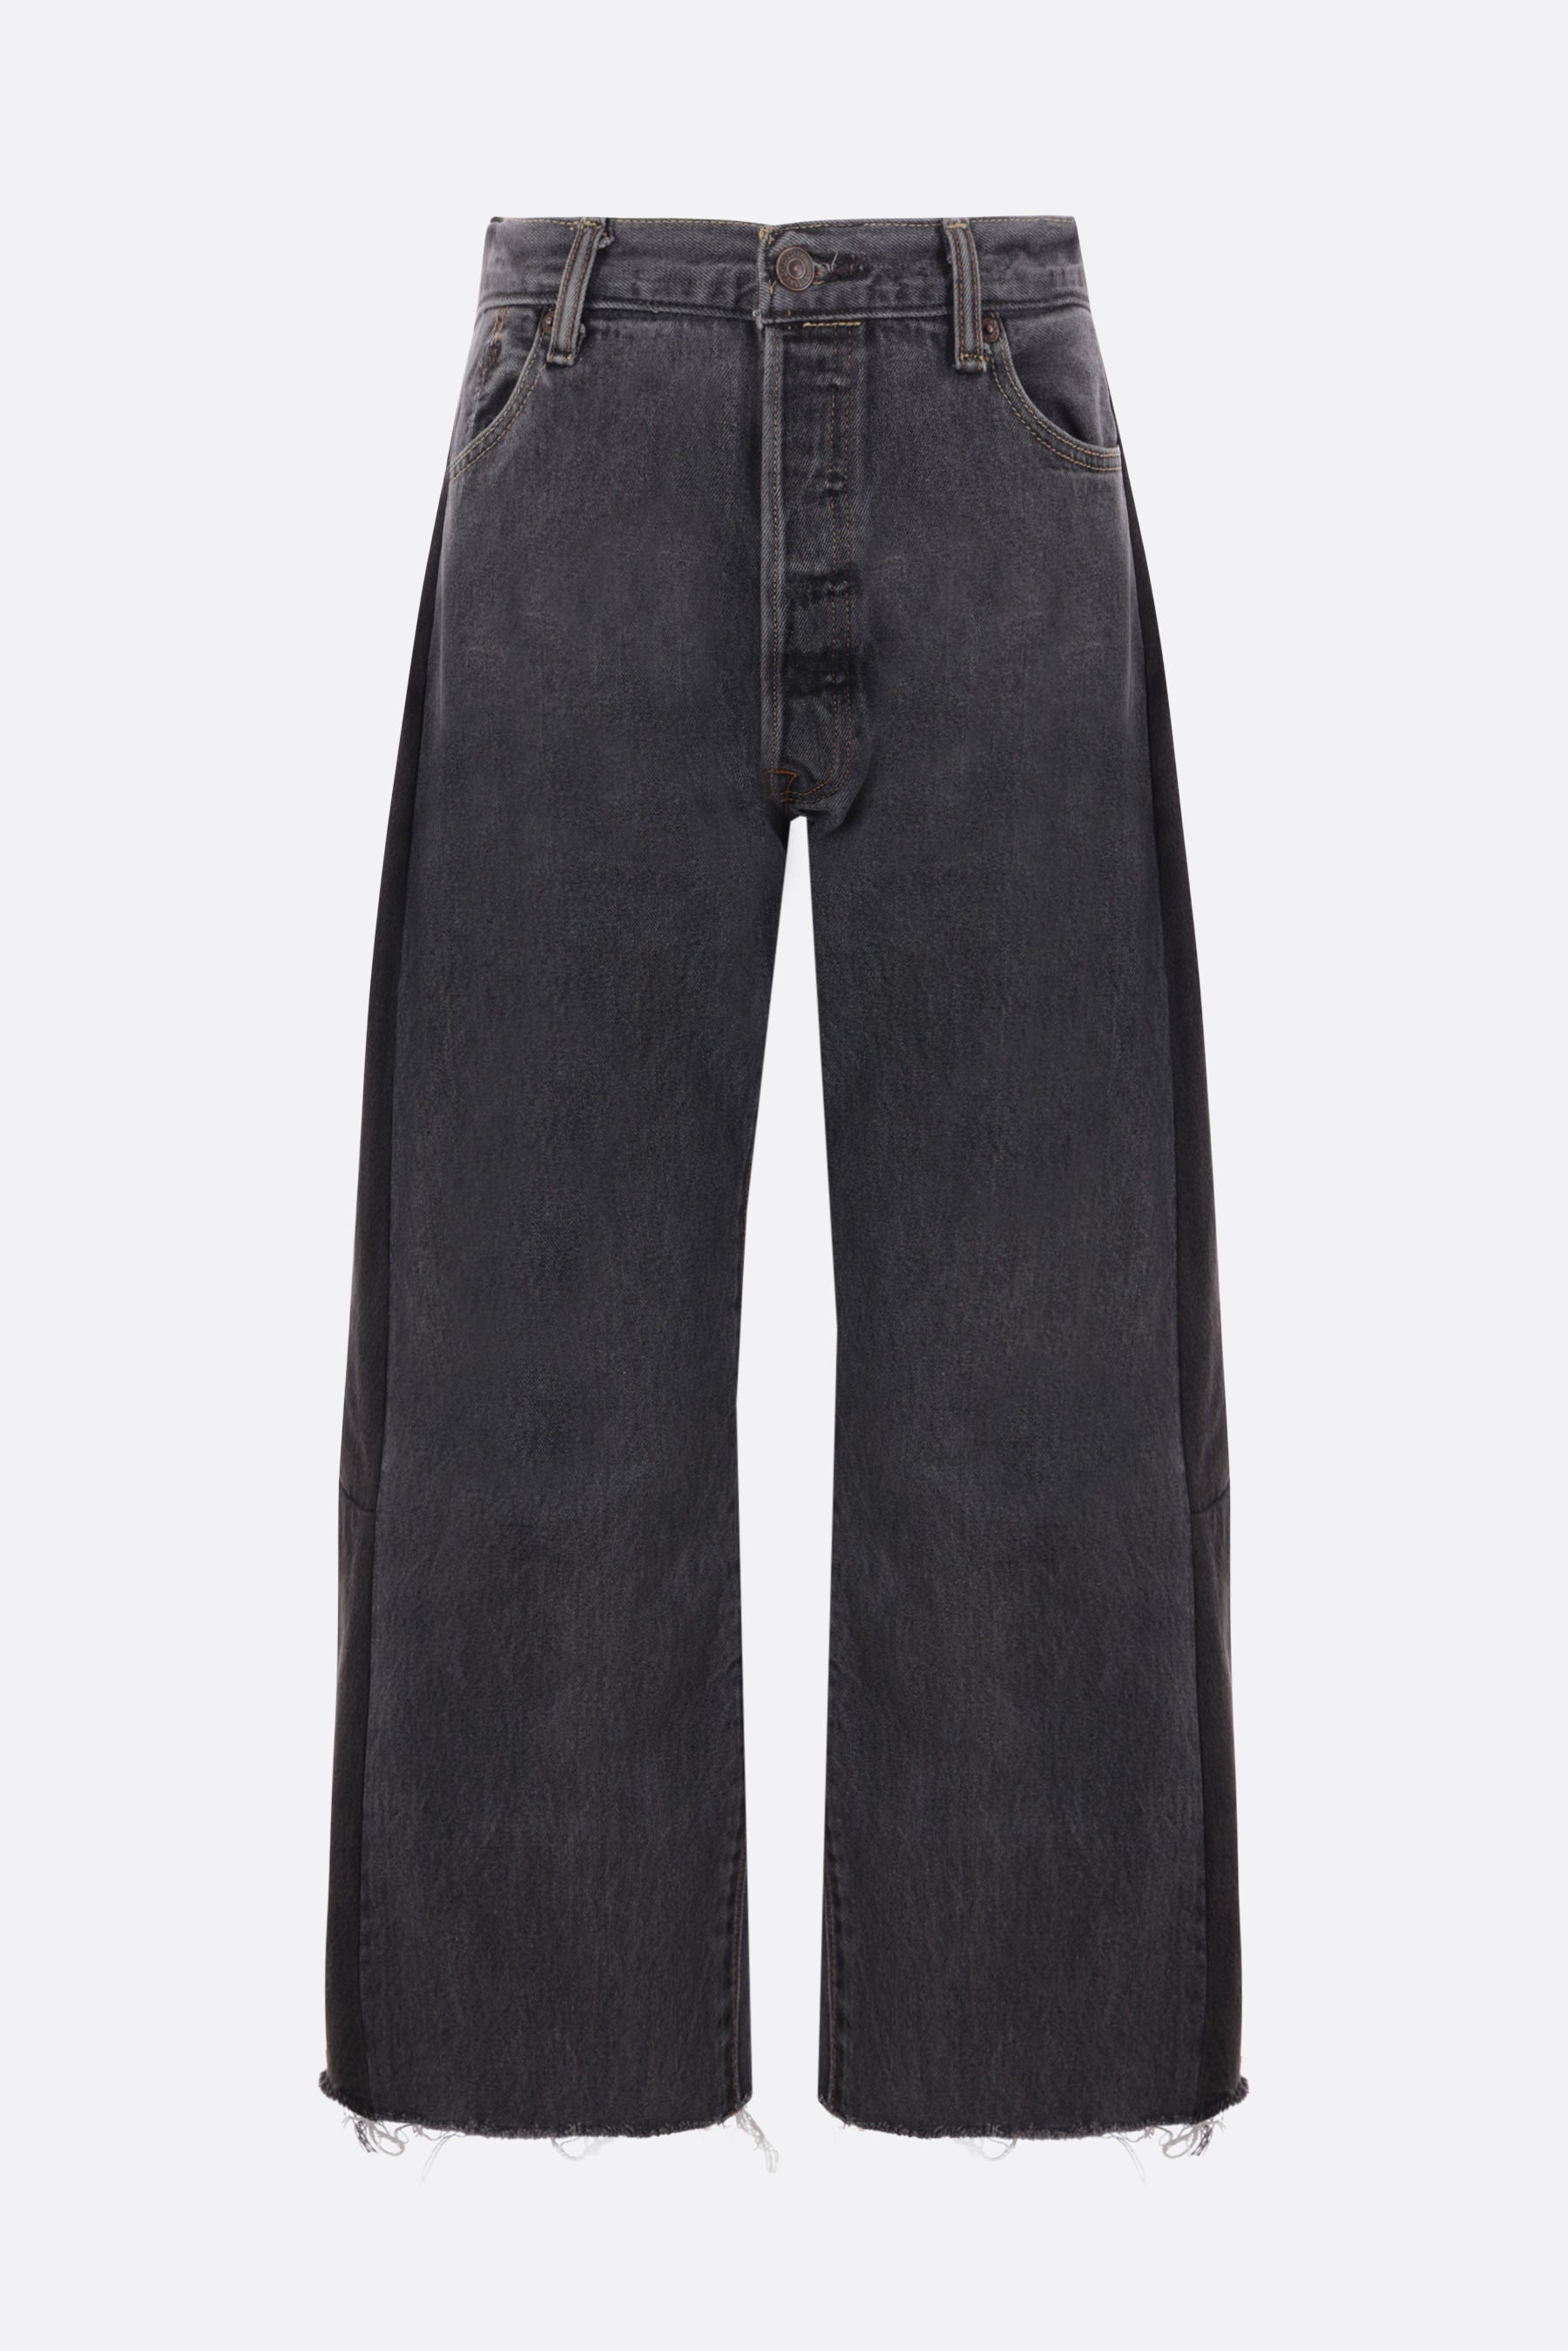 jeans Lasso in denim vintage rigenerato